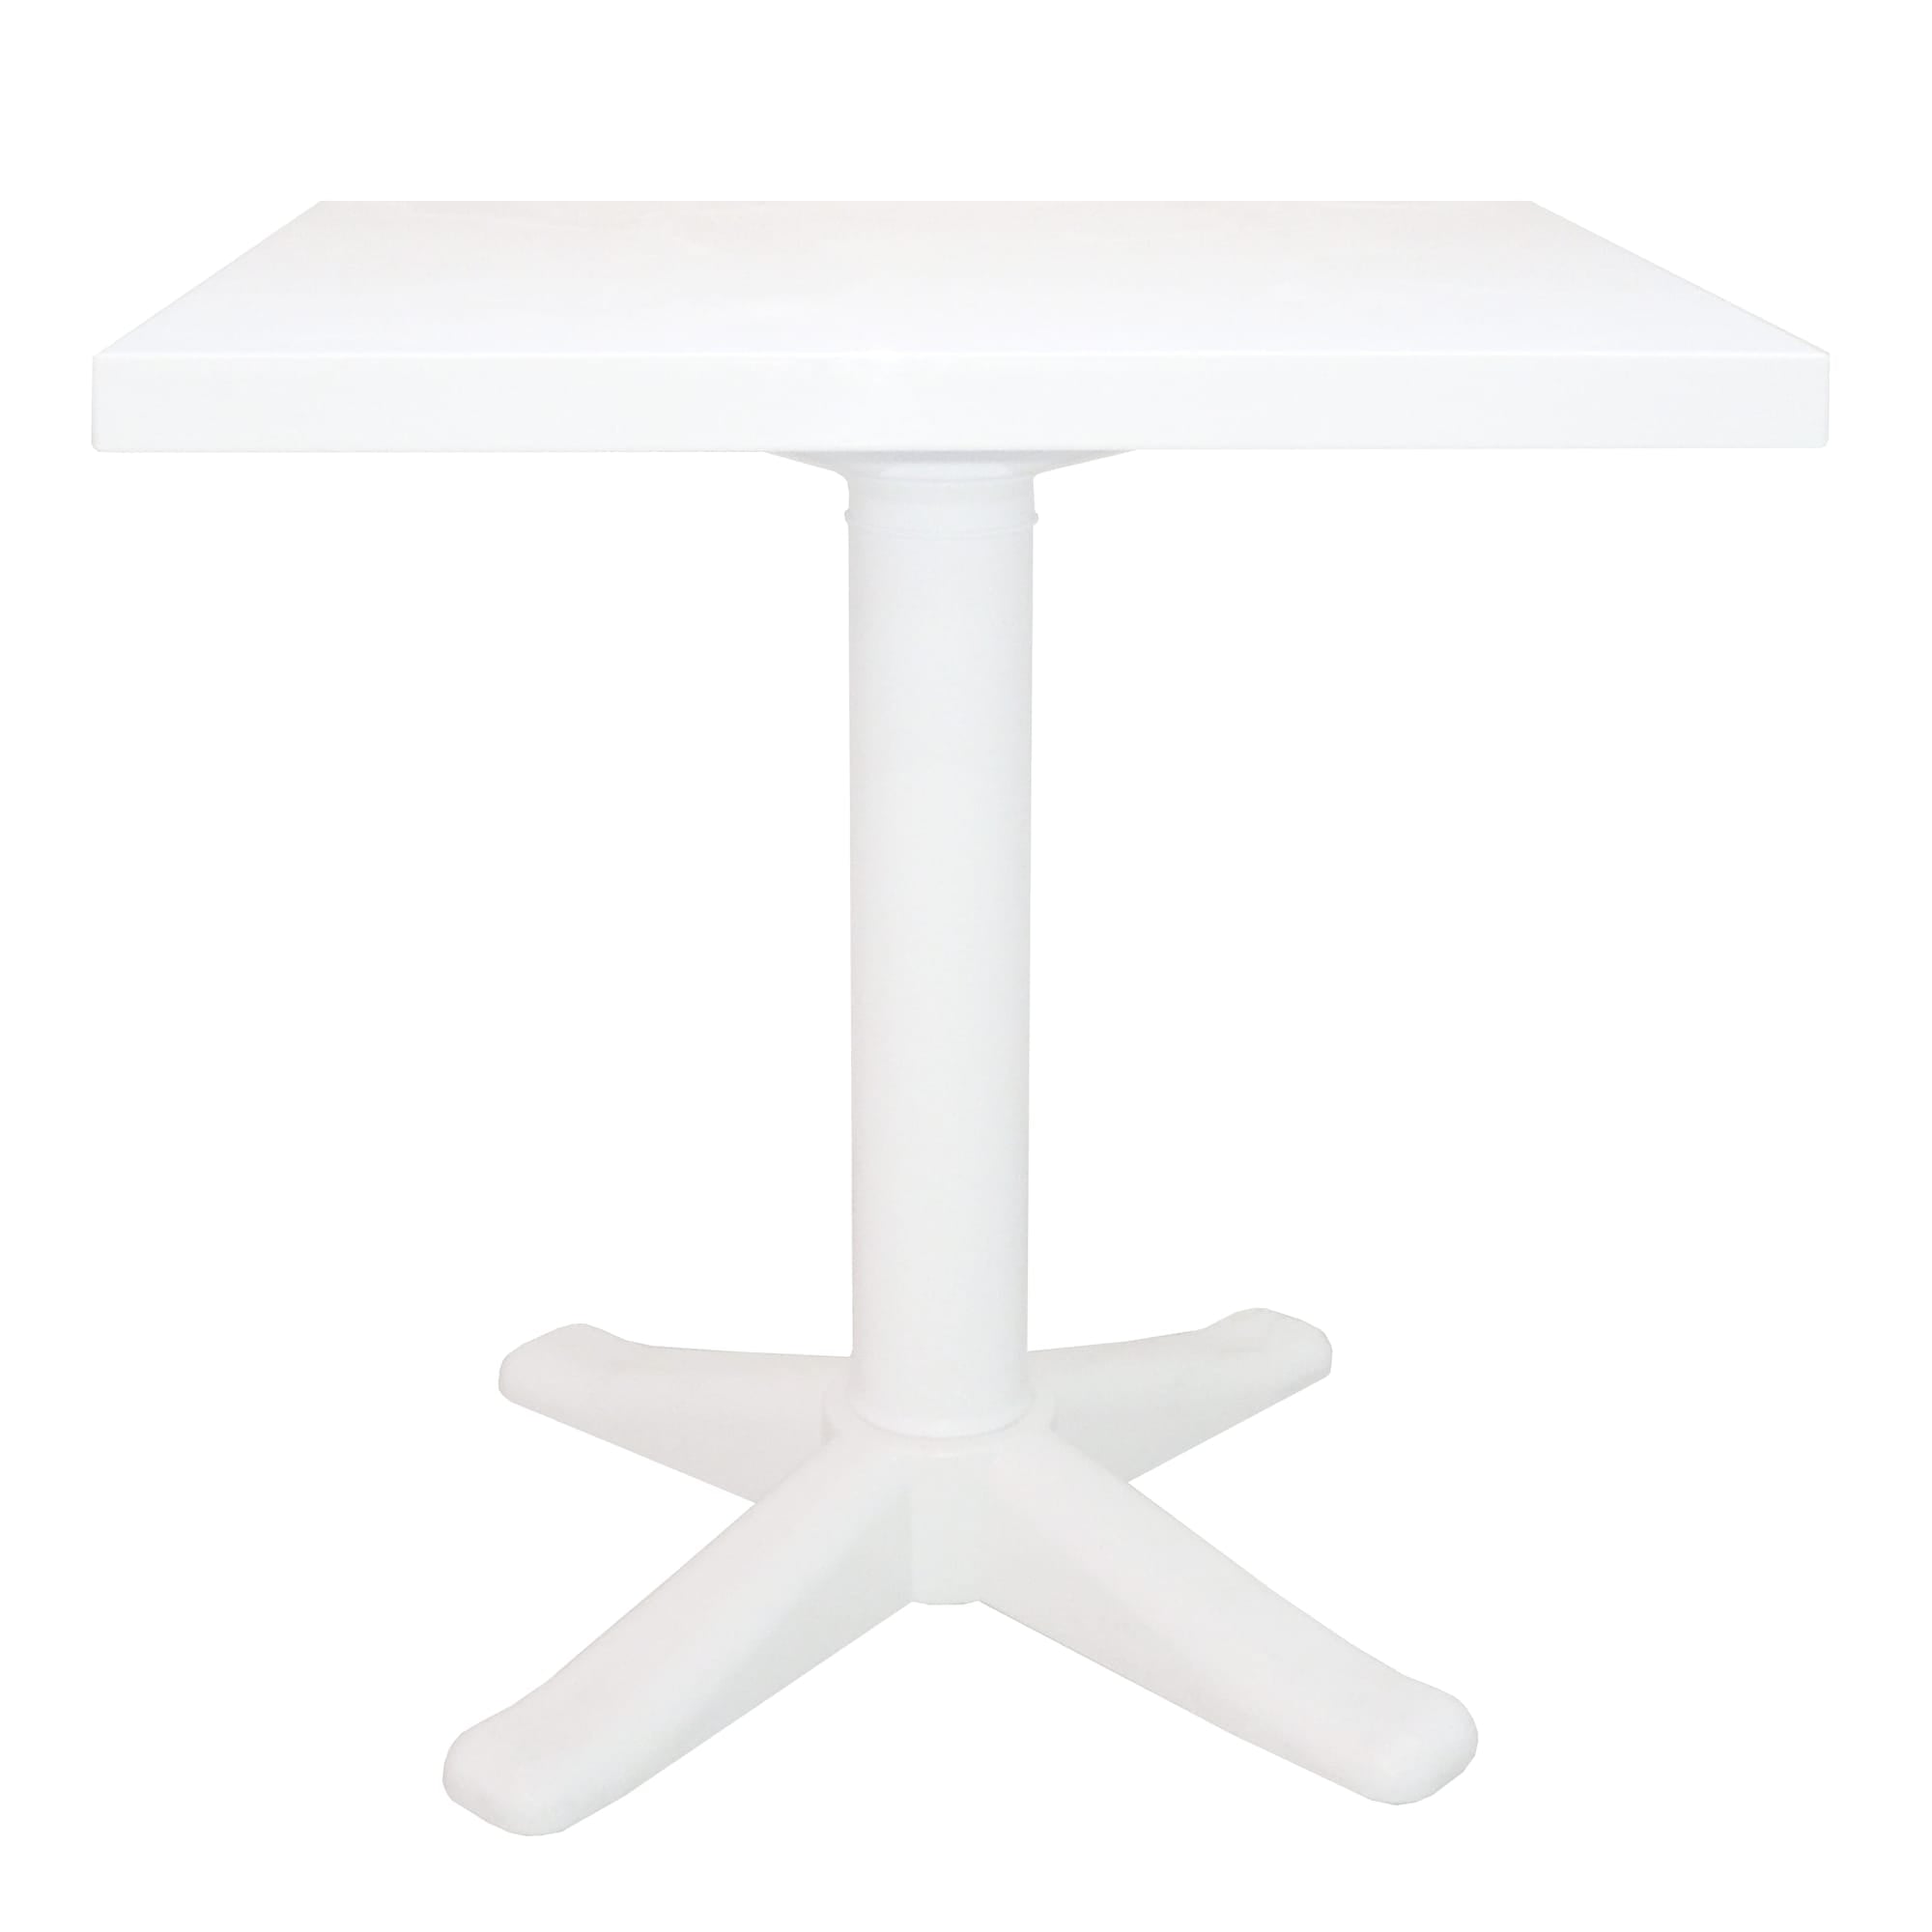 Garbar esculapi square outdoor table 70x70 white